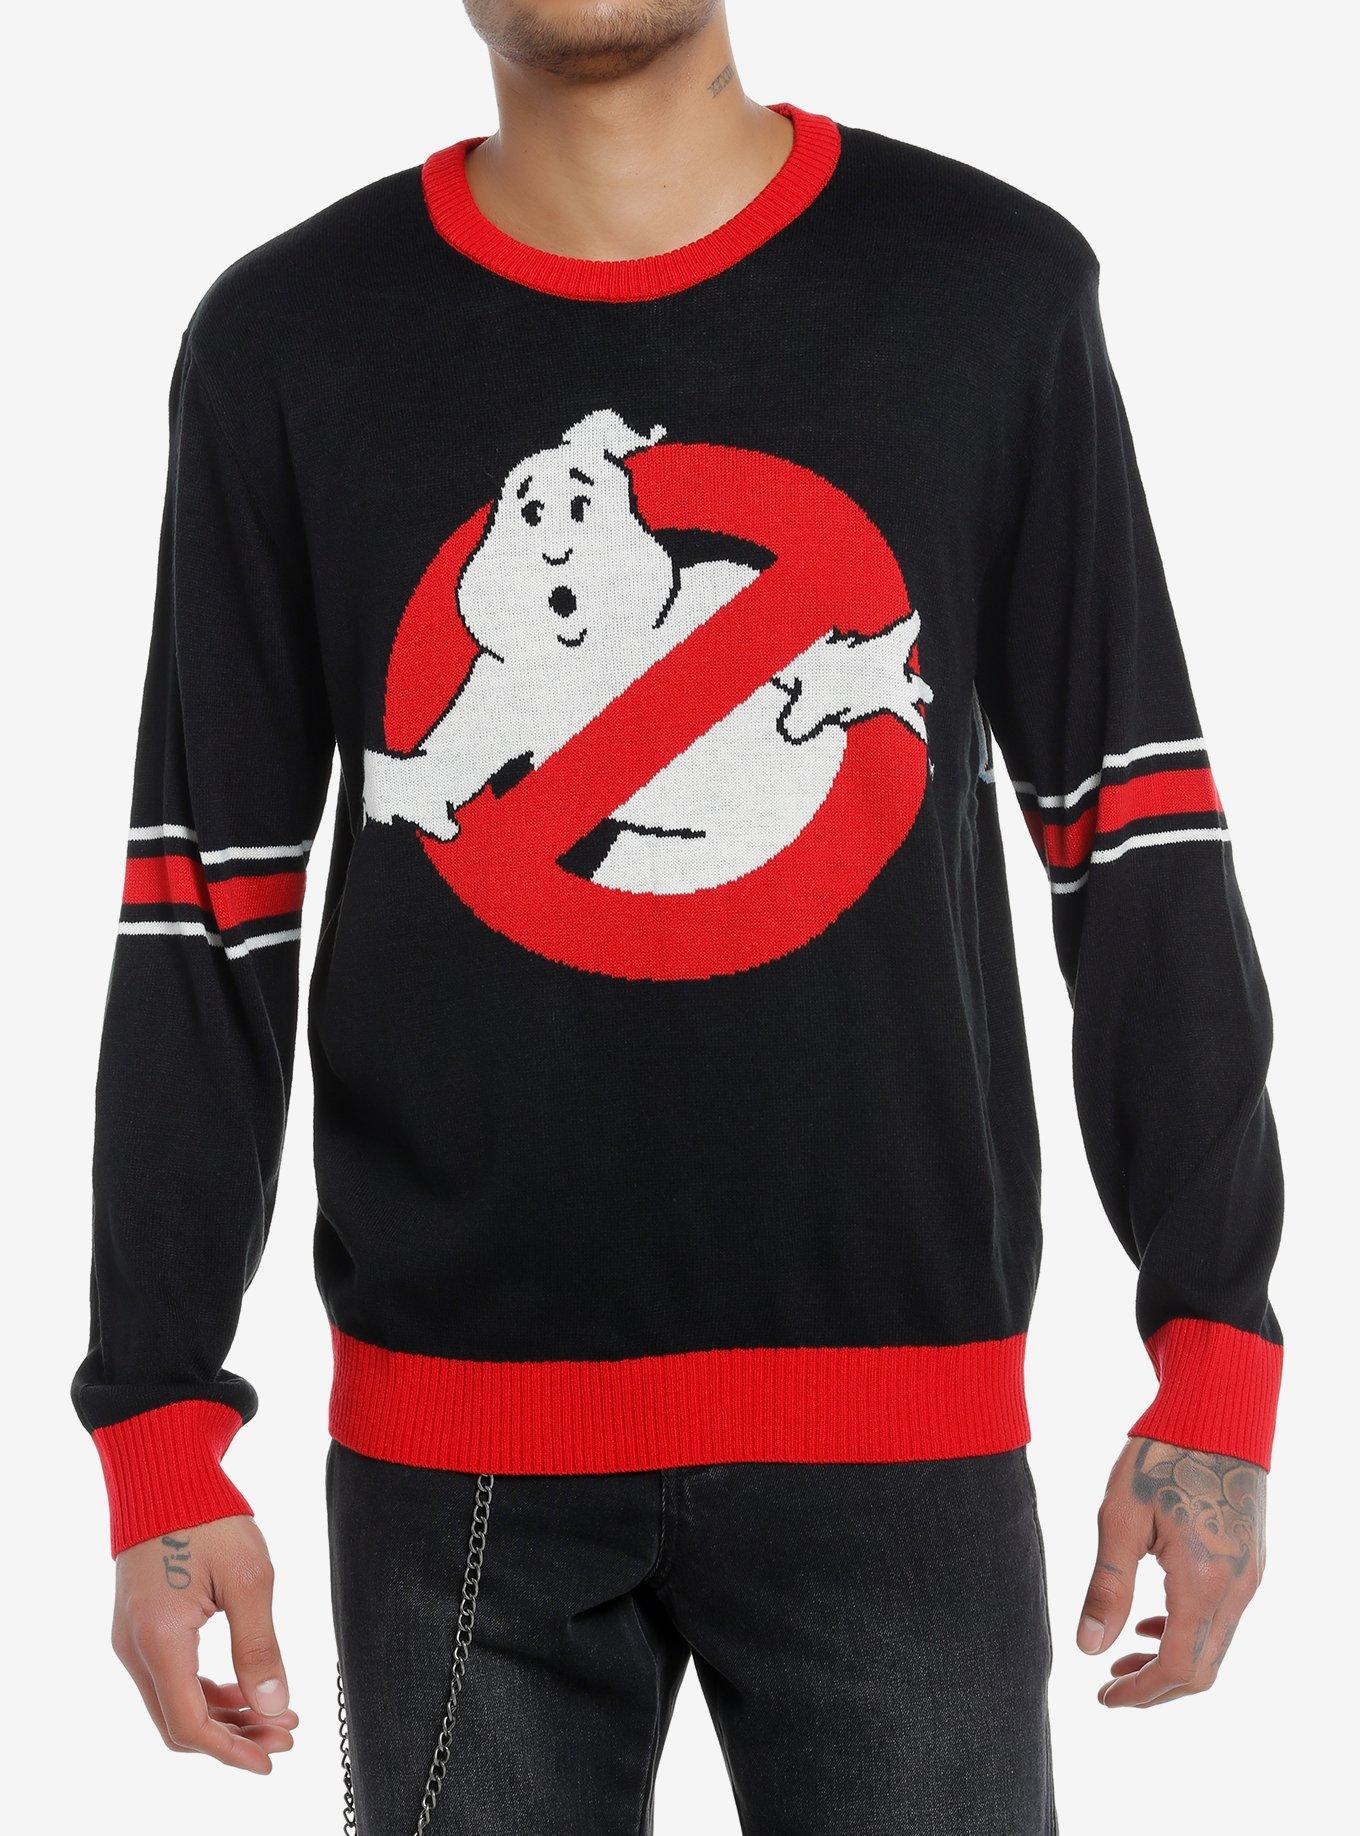 Ghostbusters Logo Intarsia Sweater | Topic Hot